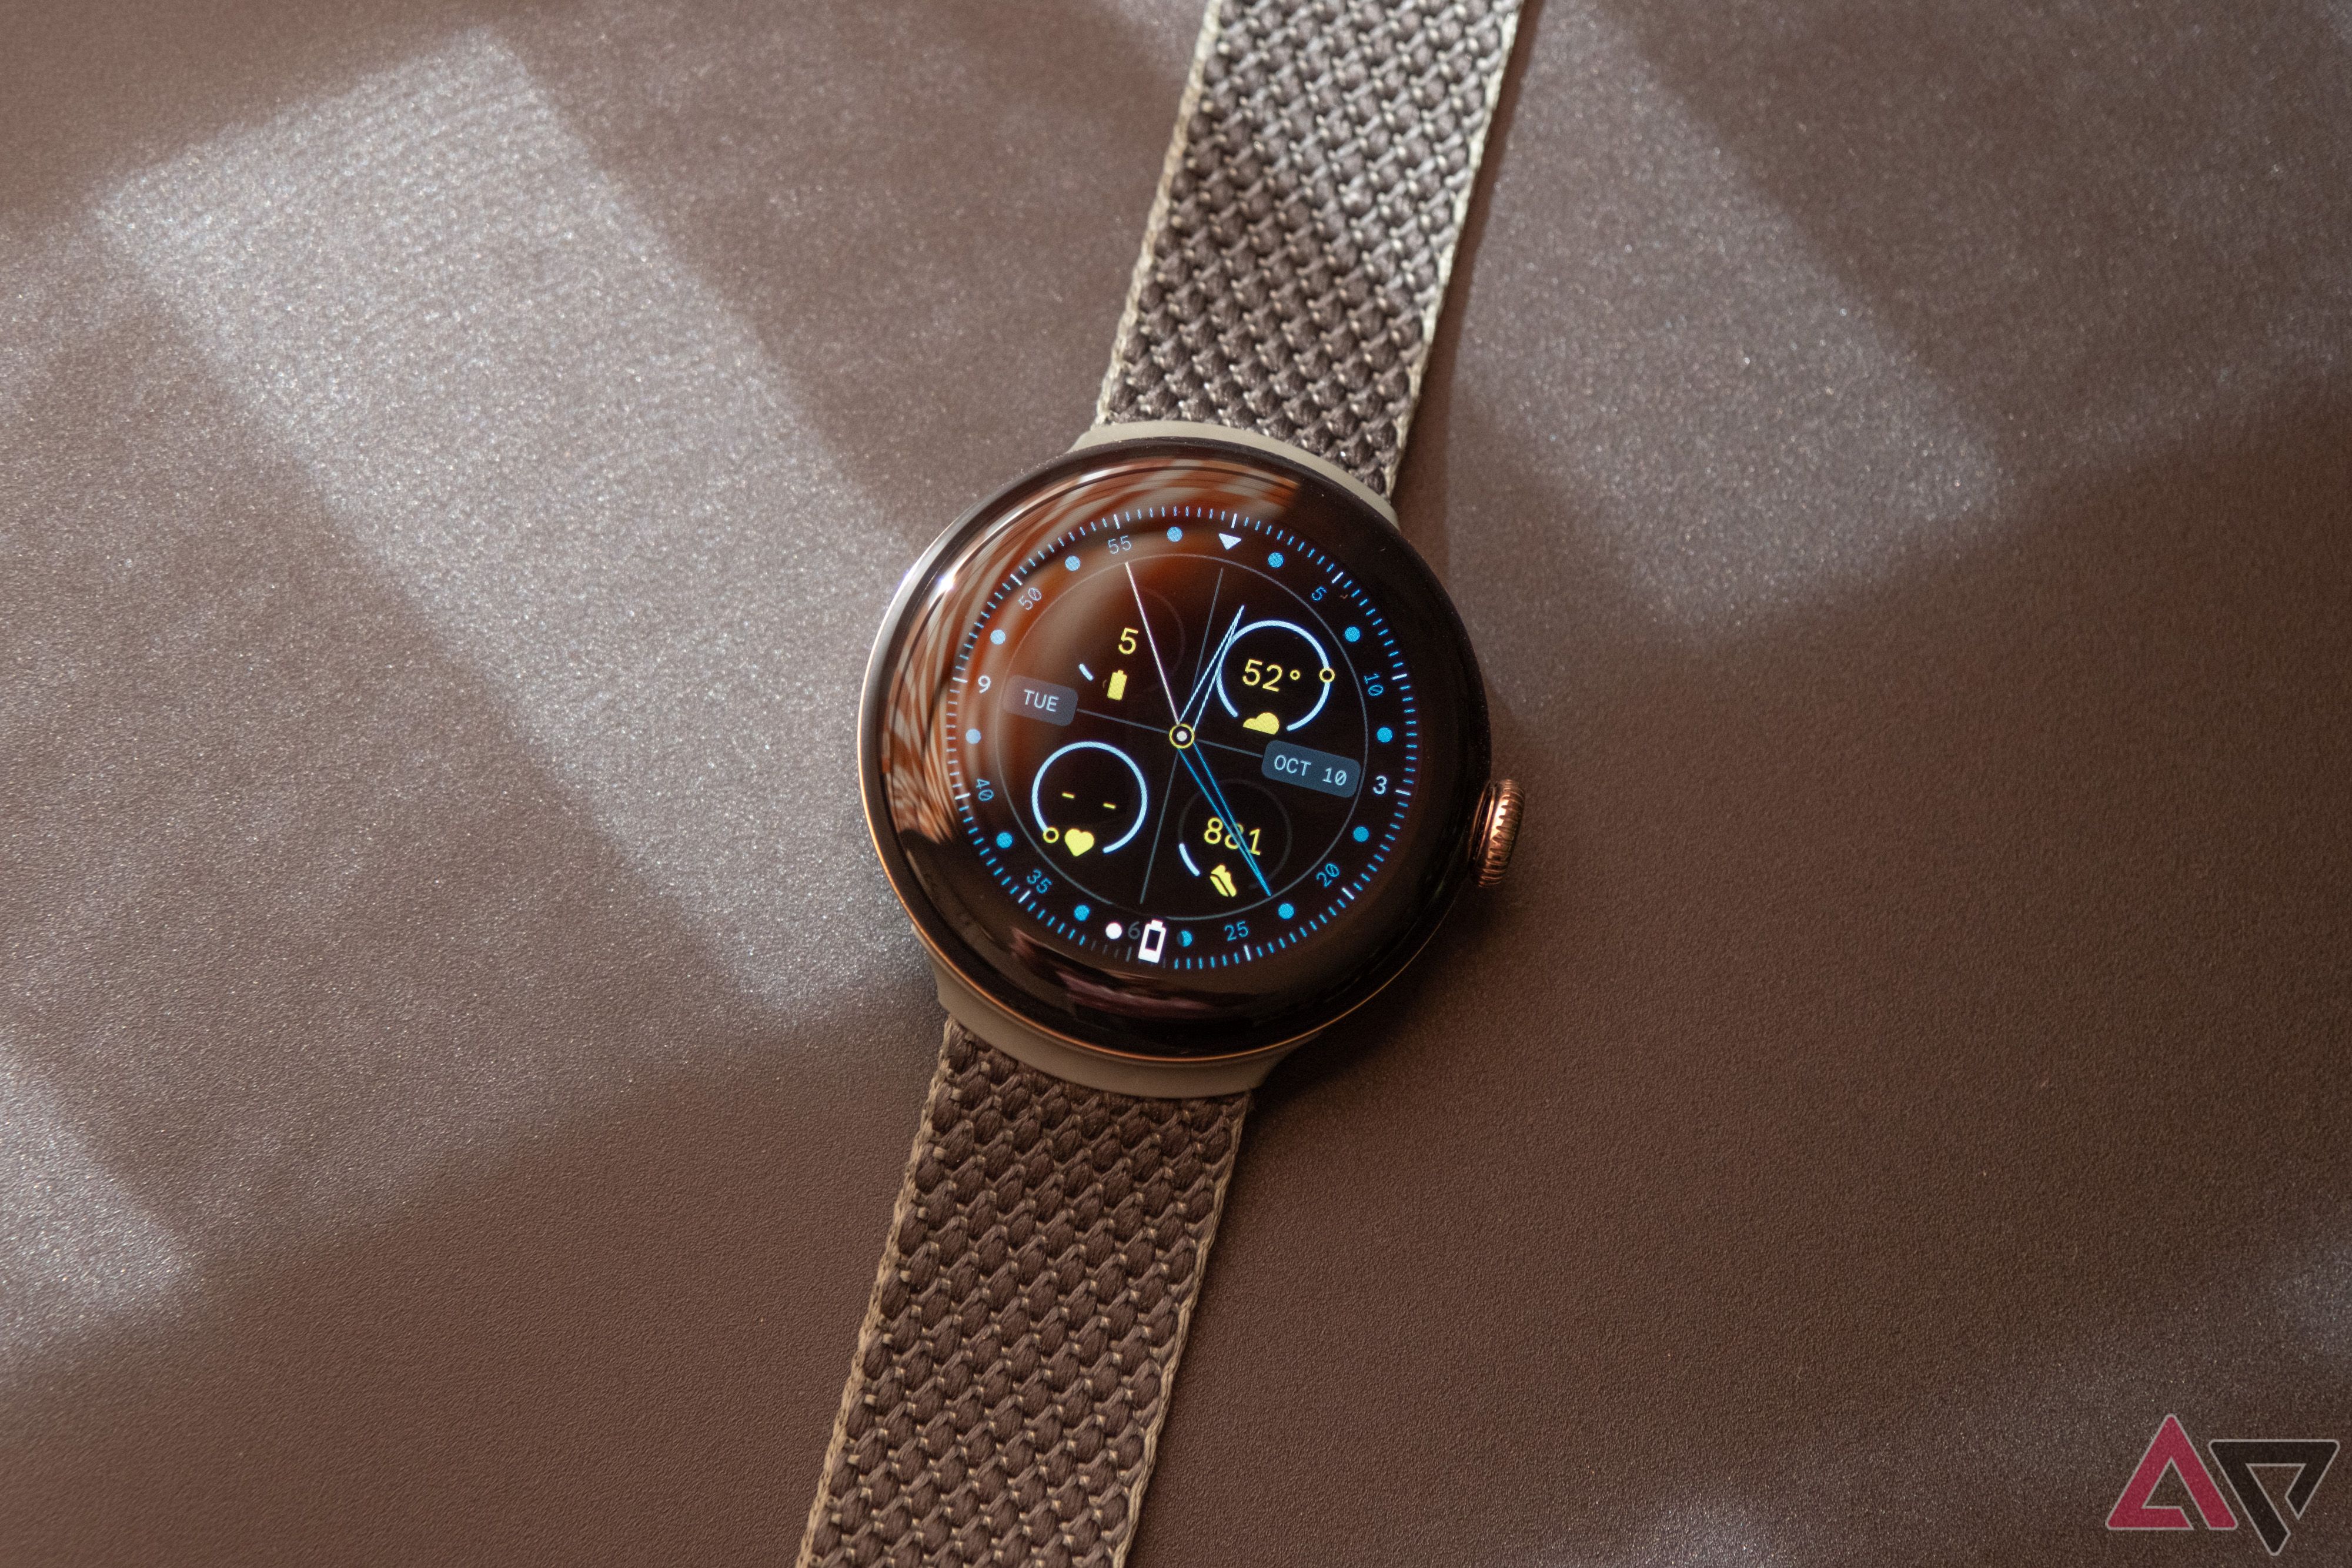 A Google Pixel Watch rests atop a tan textured surface